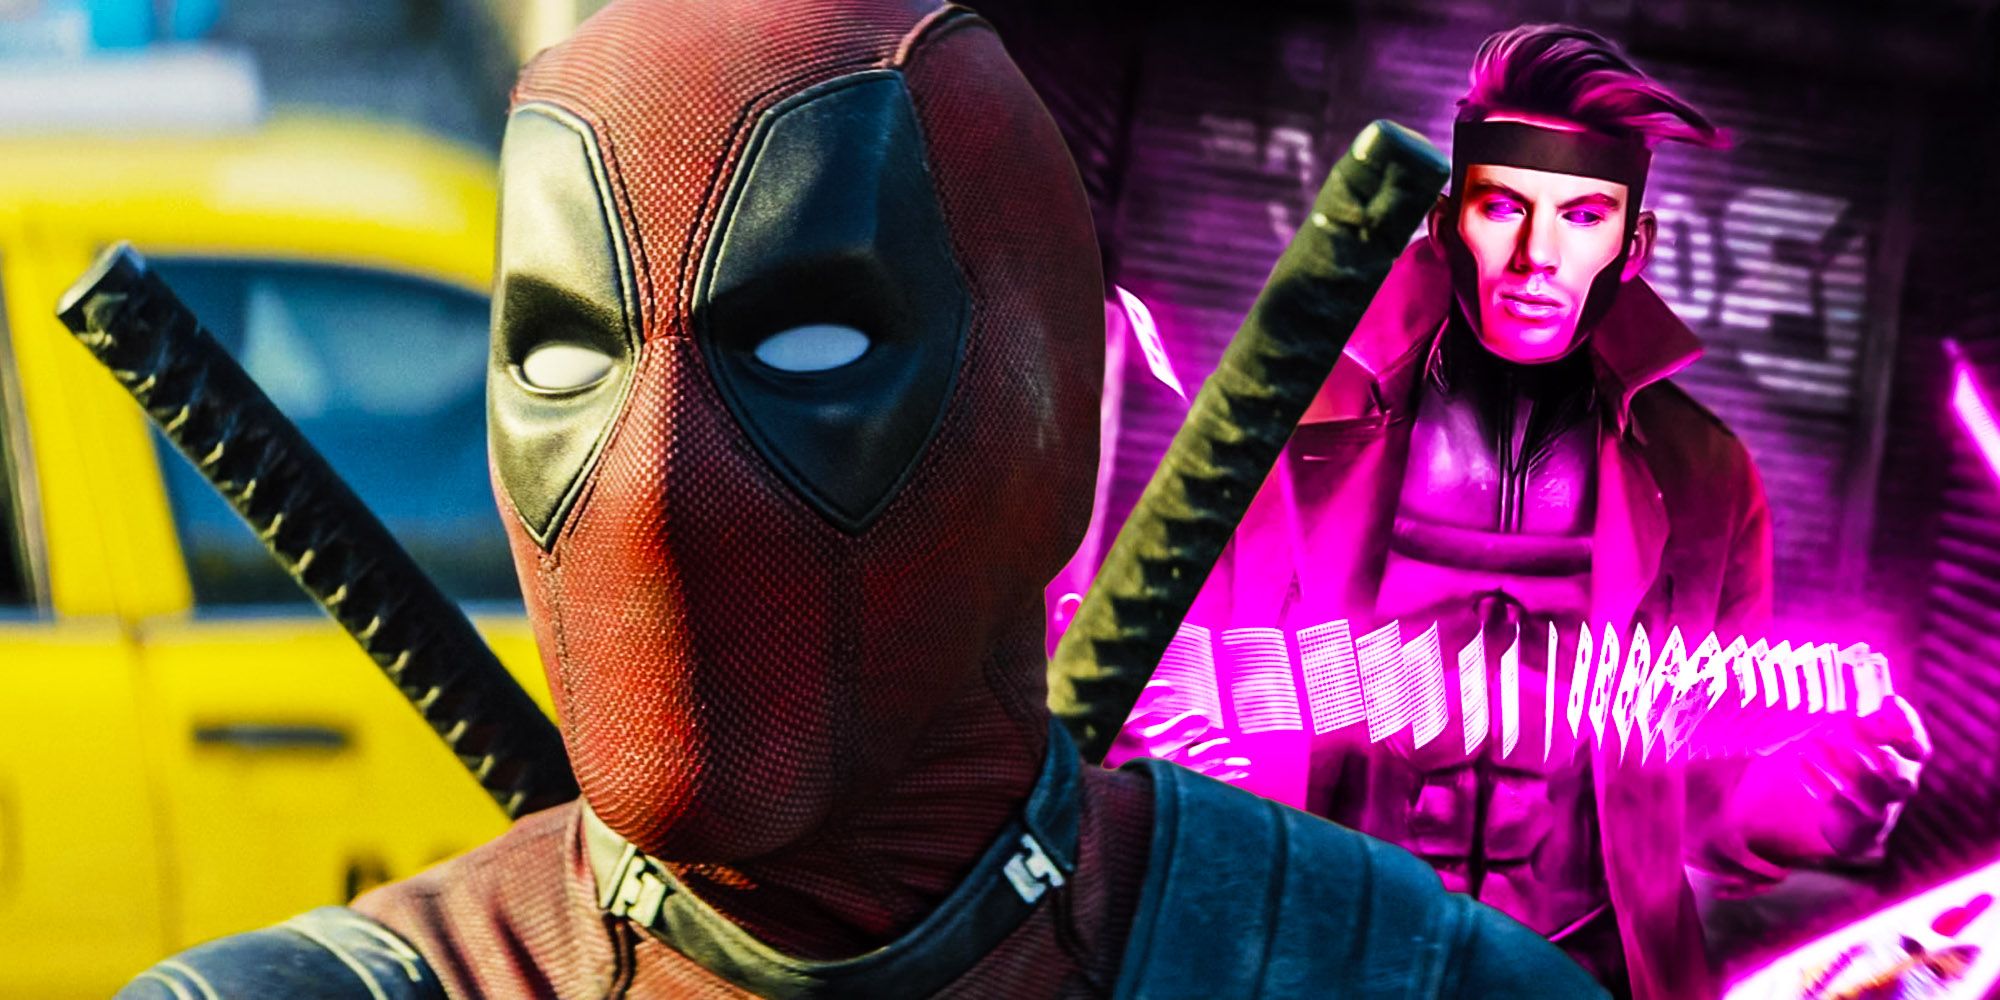 Deadpool 3 Channing Tatum Gambit Rumor Seemingly Confirmed by Cast Listing  - Comic Book Movies and Superhero Movie News - SuperHeroHype